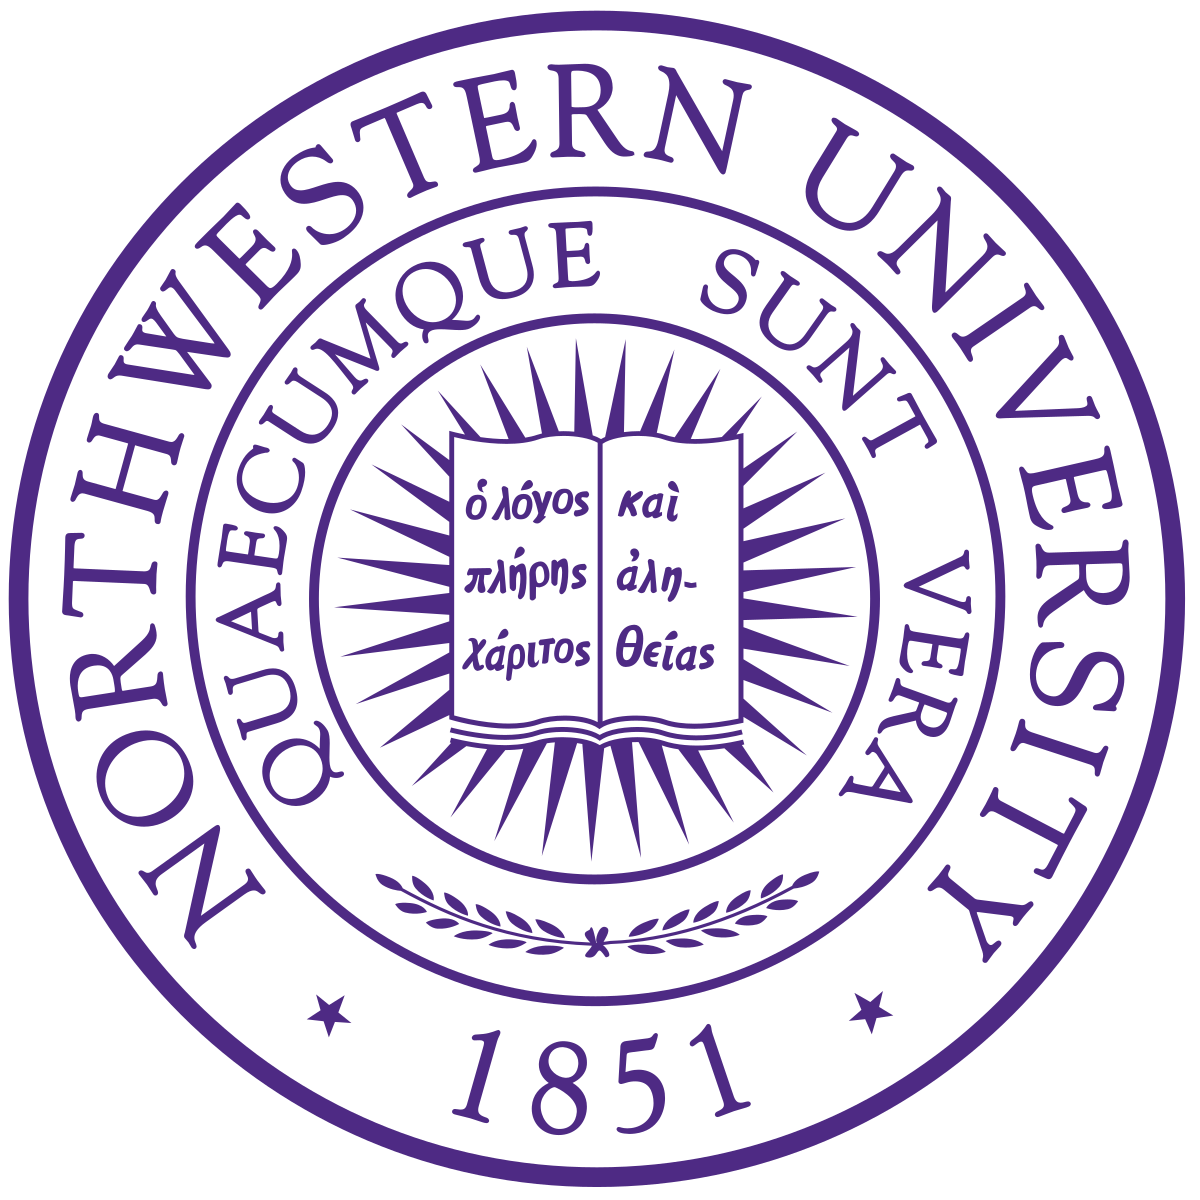 Northwestern University Seal